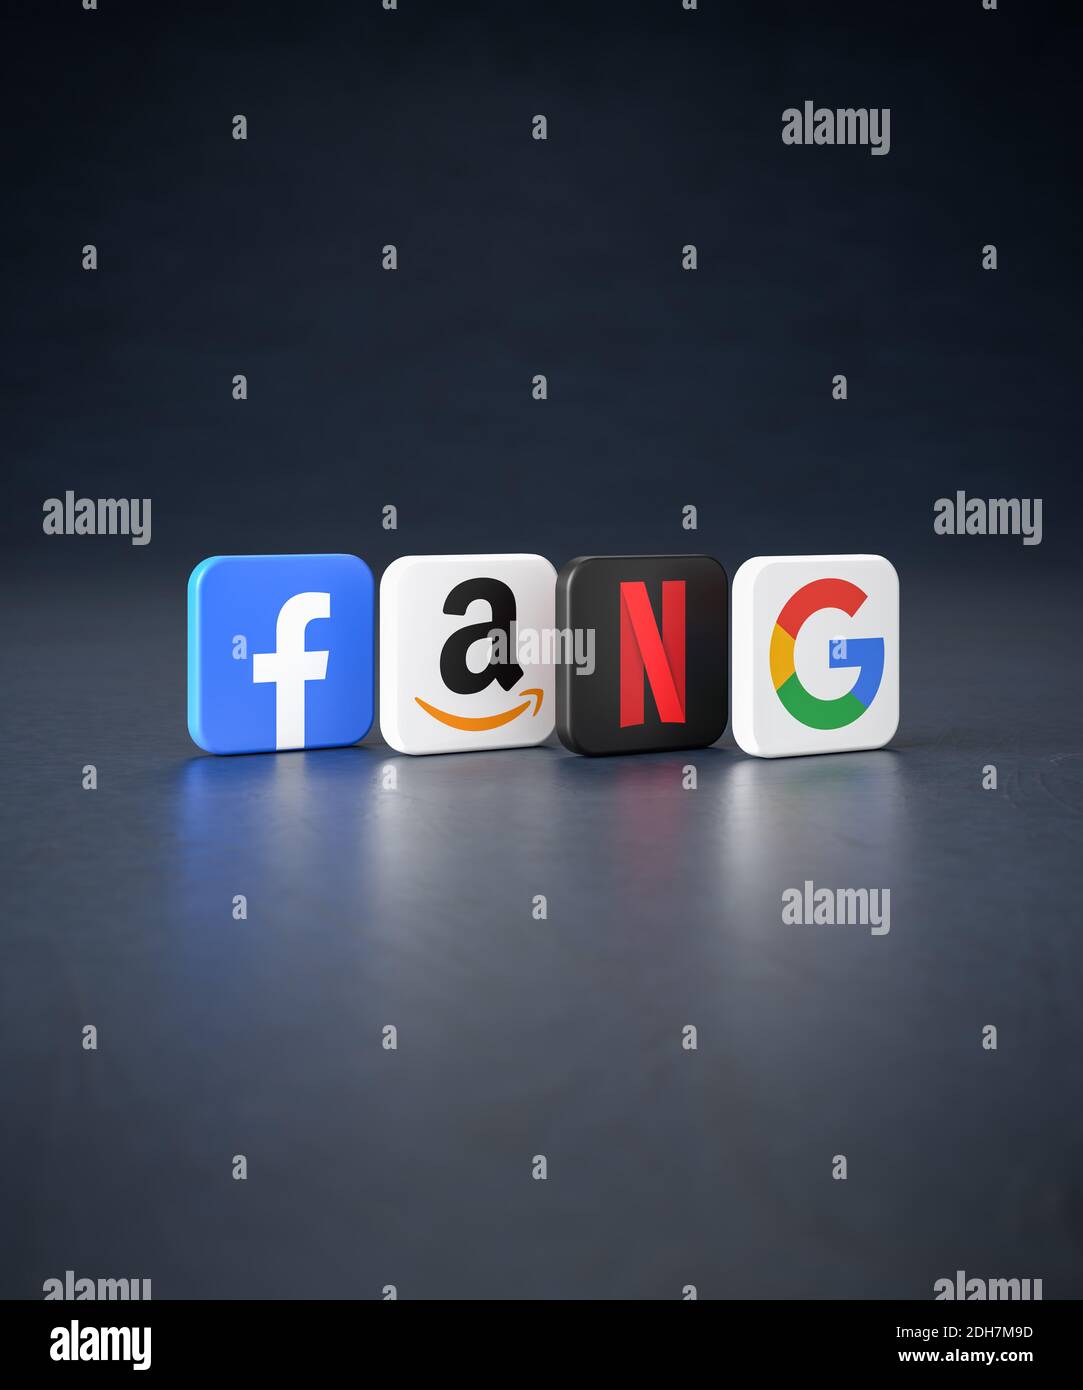 Logos of the so called FANG shares on a dark background. The tech giants Facebook, Amazon, Netflix, Google / Alphabet. Stock Photo